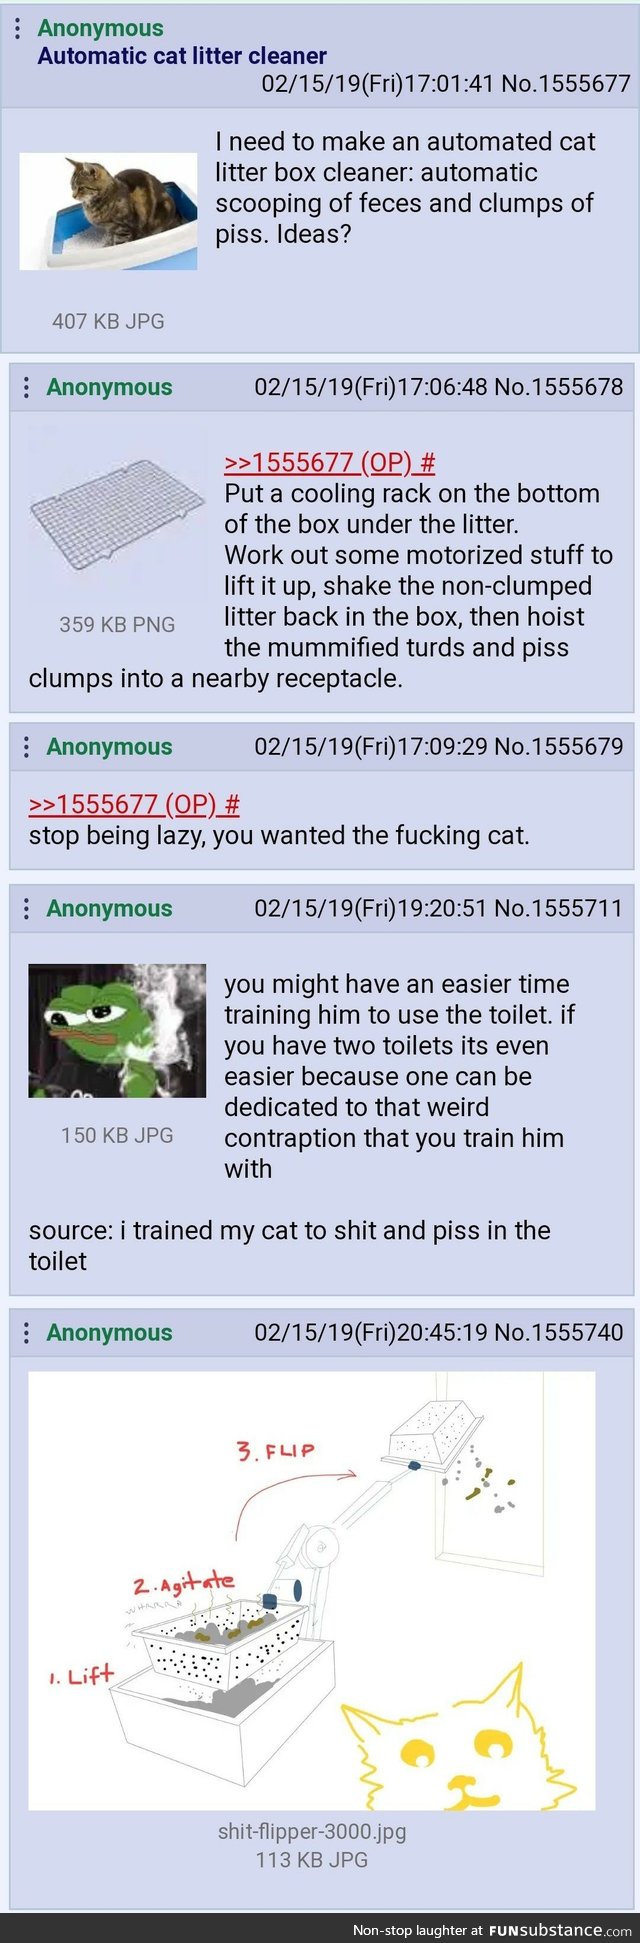 Anon defenestrates his cat